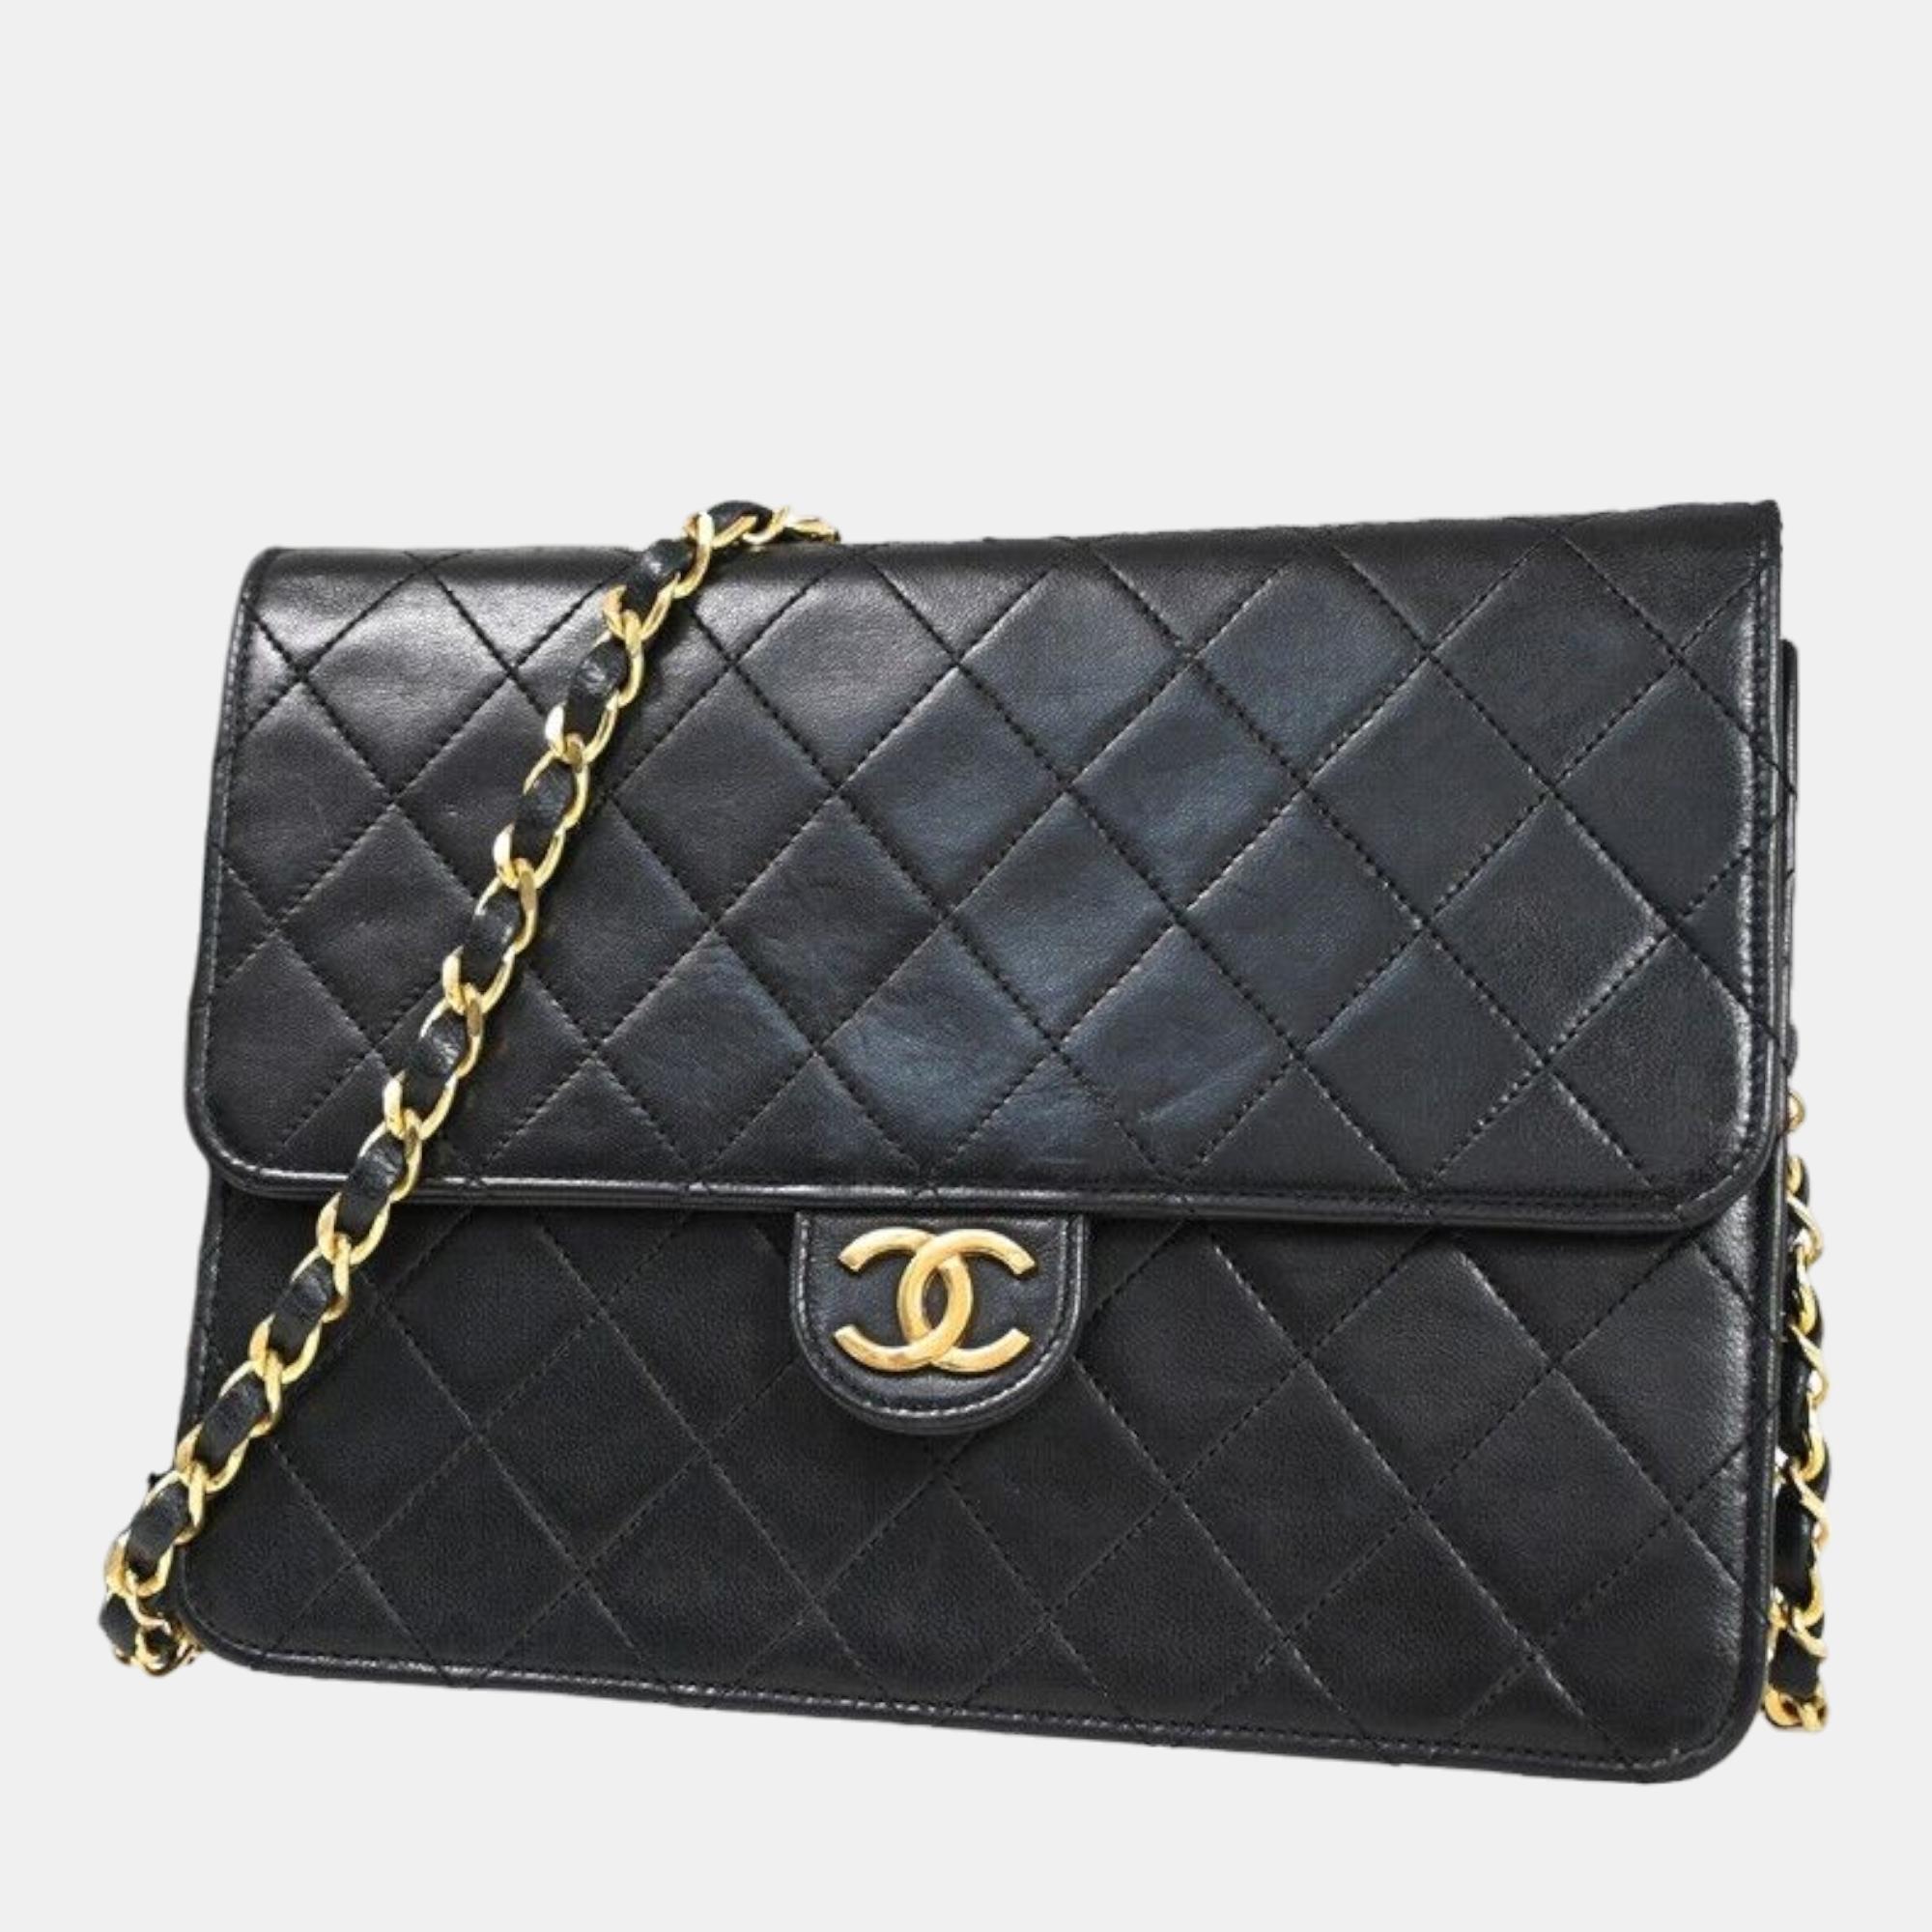 Chanel black leather jumbo single flap bag